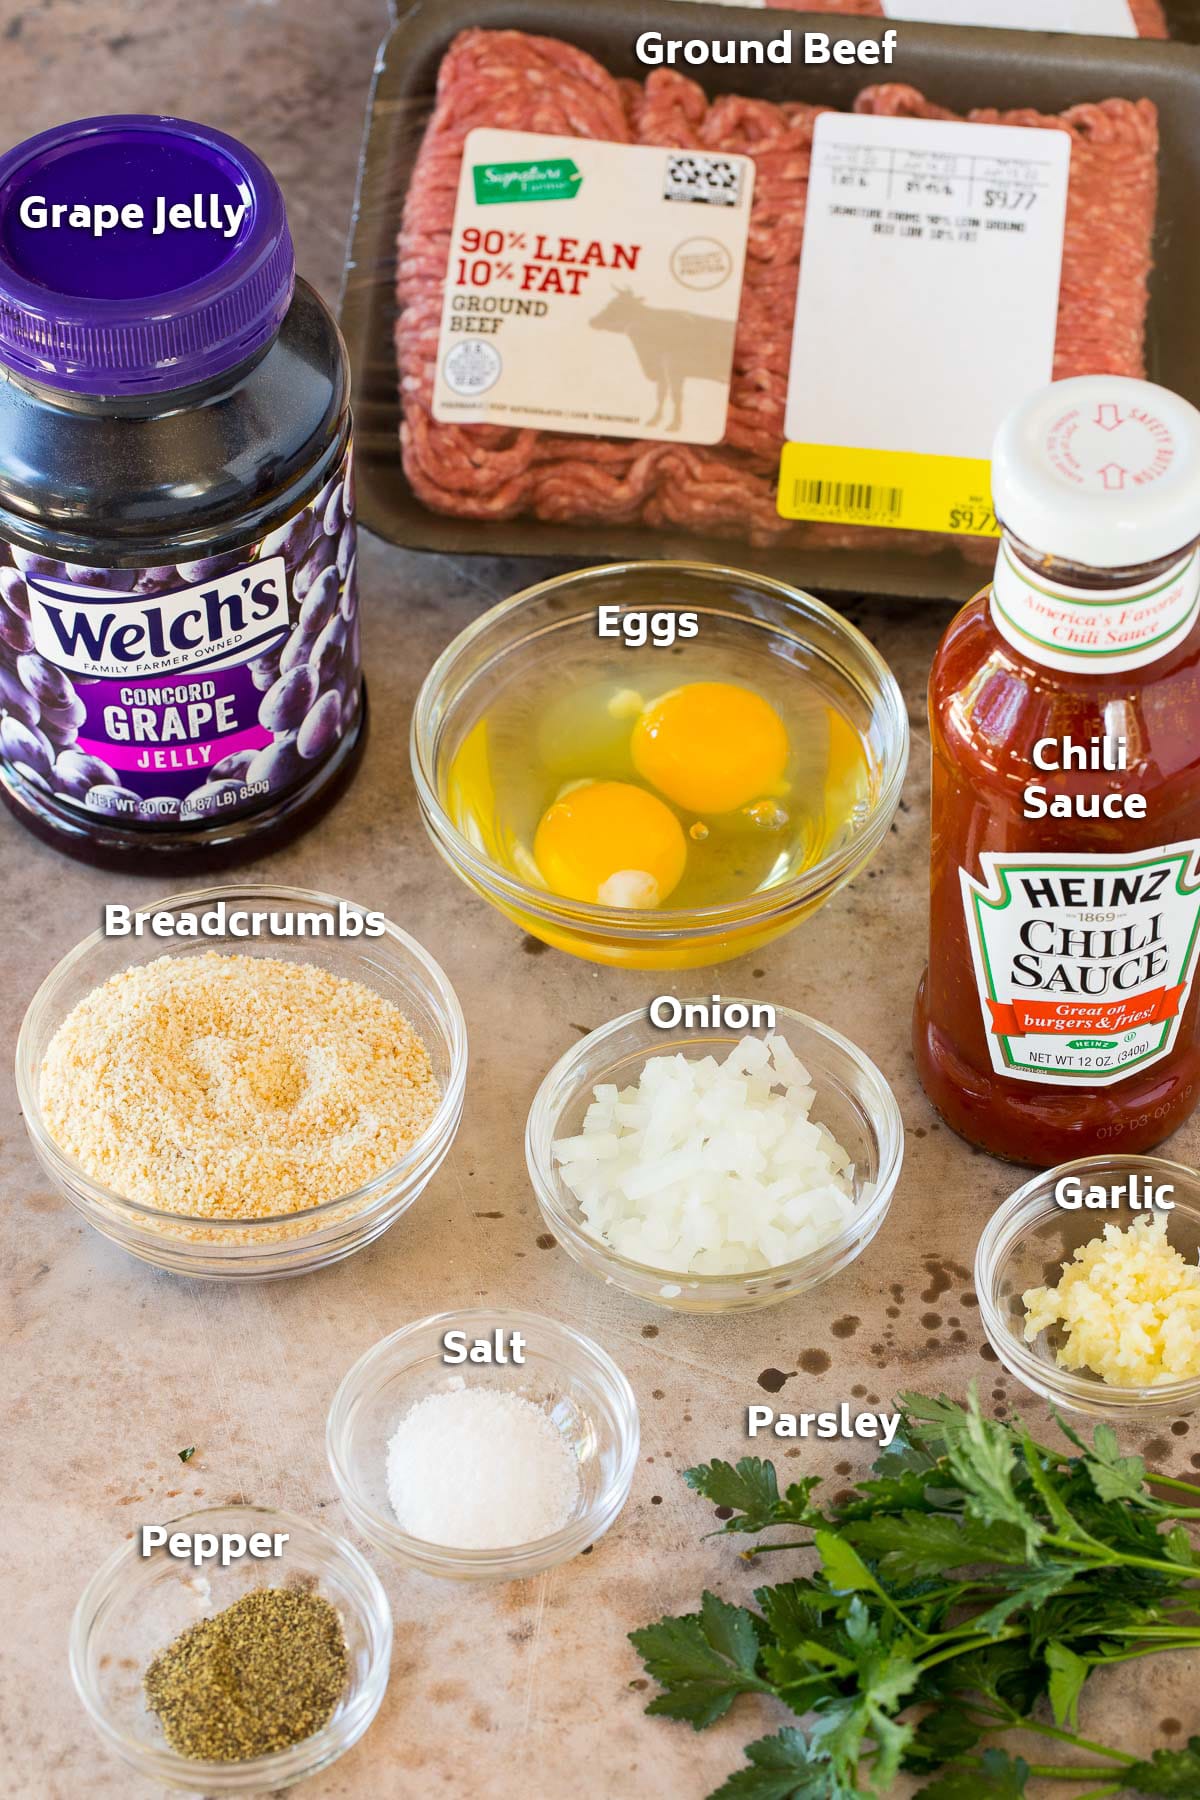 Ingredients including ground beef, eggs, breadcrumbs, seasonings and grape jelly.